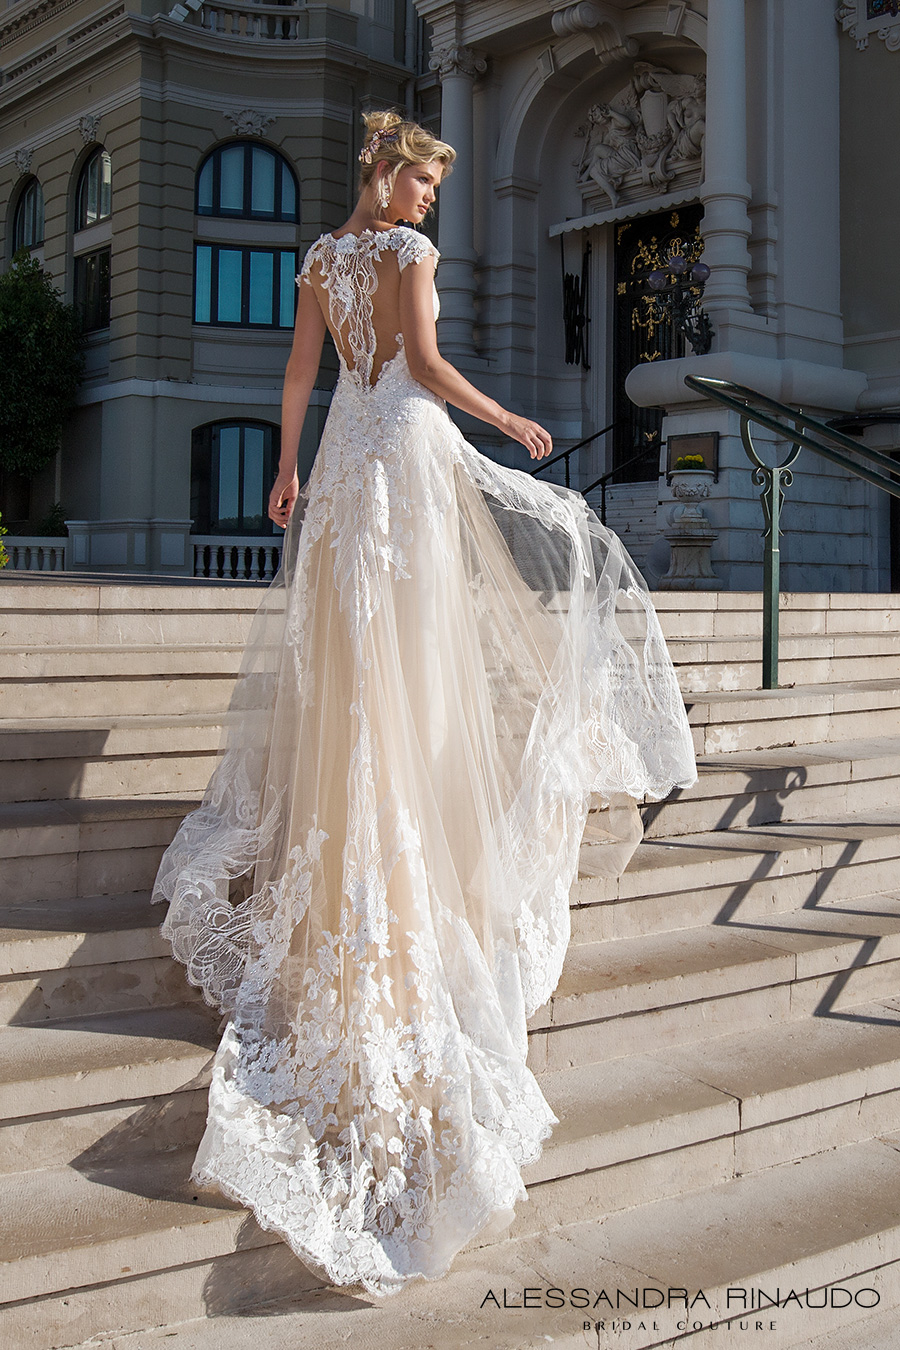 Alessandra Rinaudo wedding gown